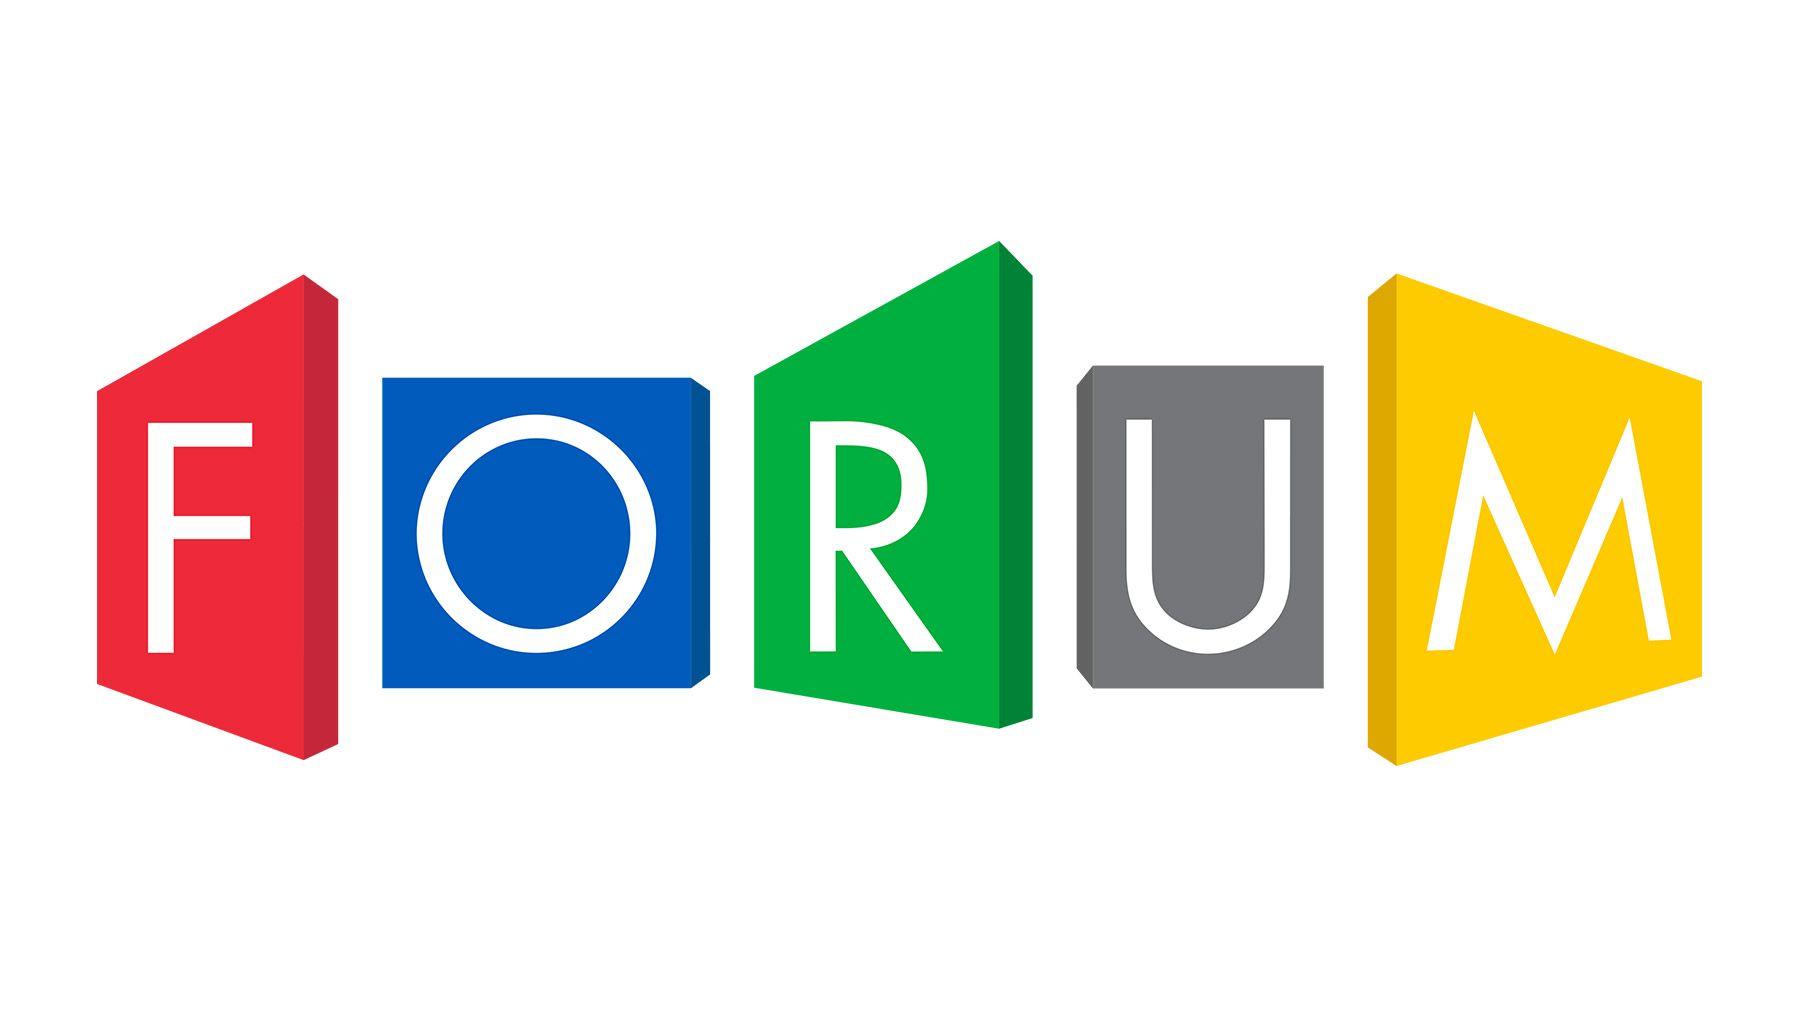 Forum Logo - Forum Logos